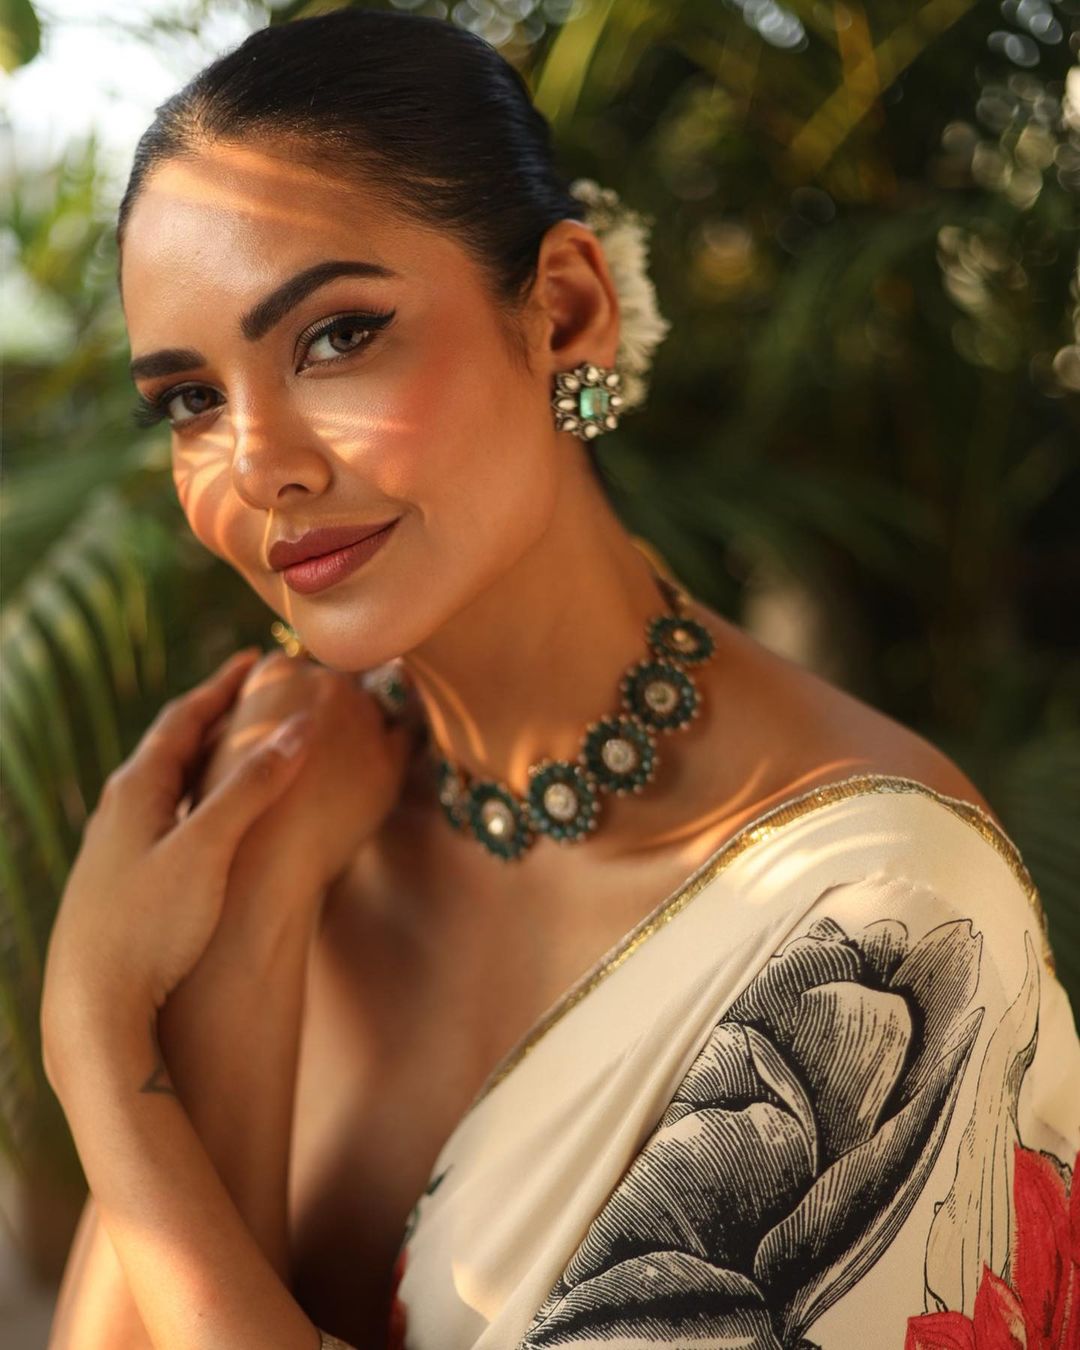 Esha Gupta looks drop-dead gorgeous in the close-up shot